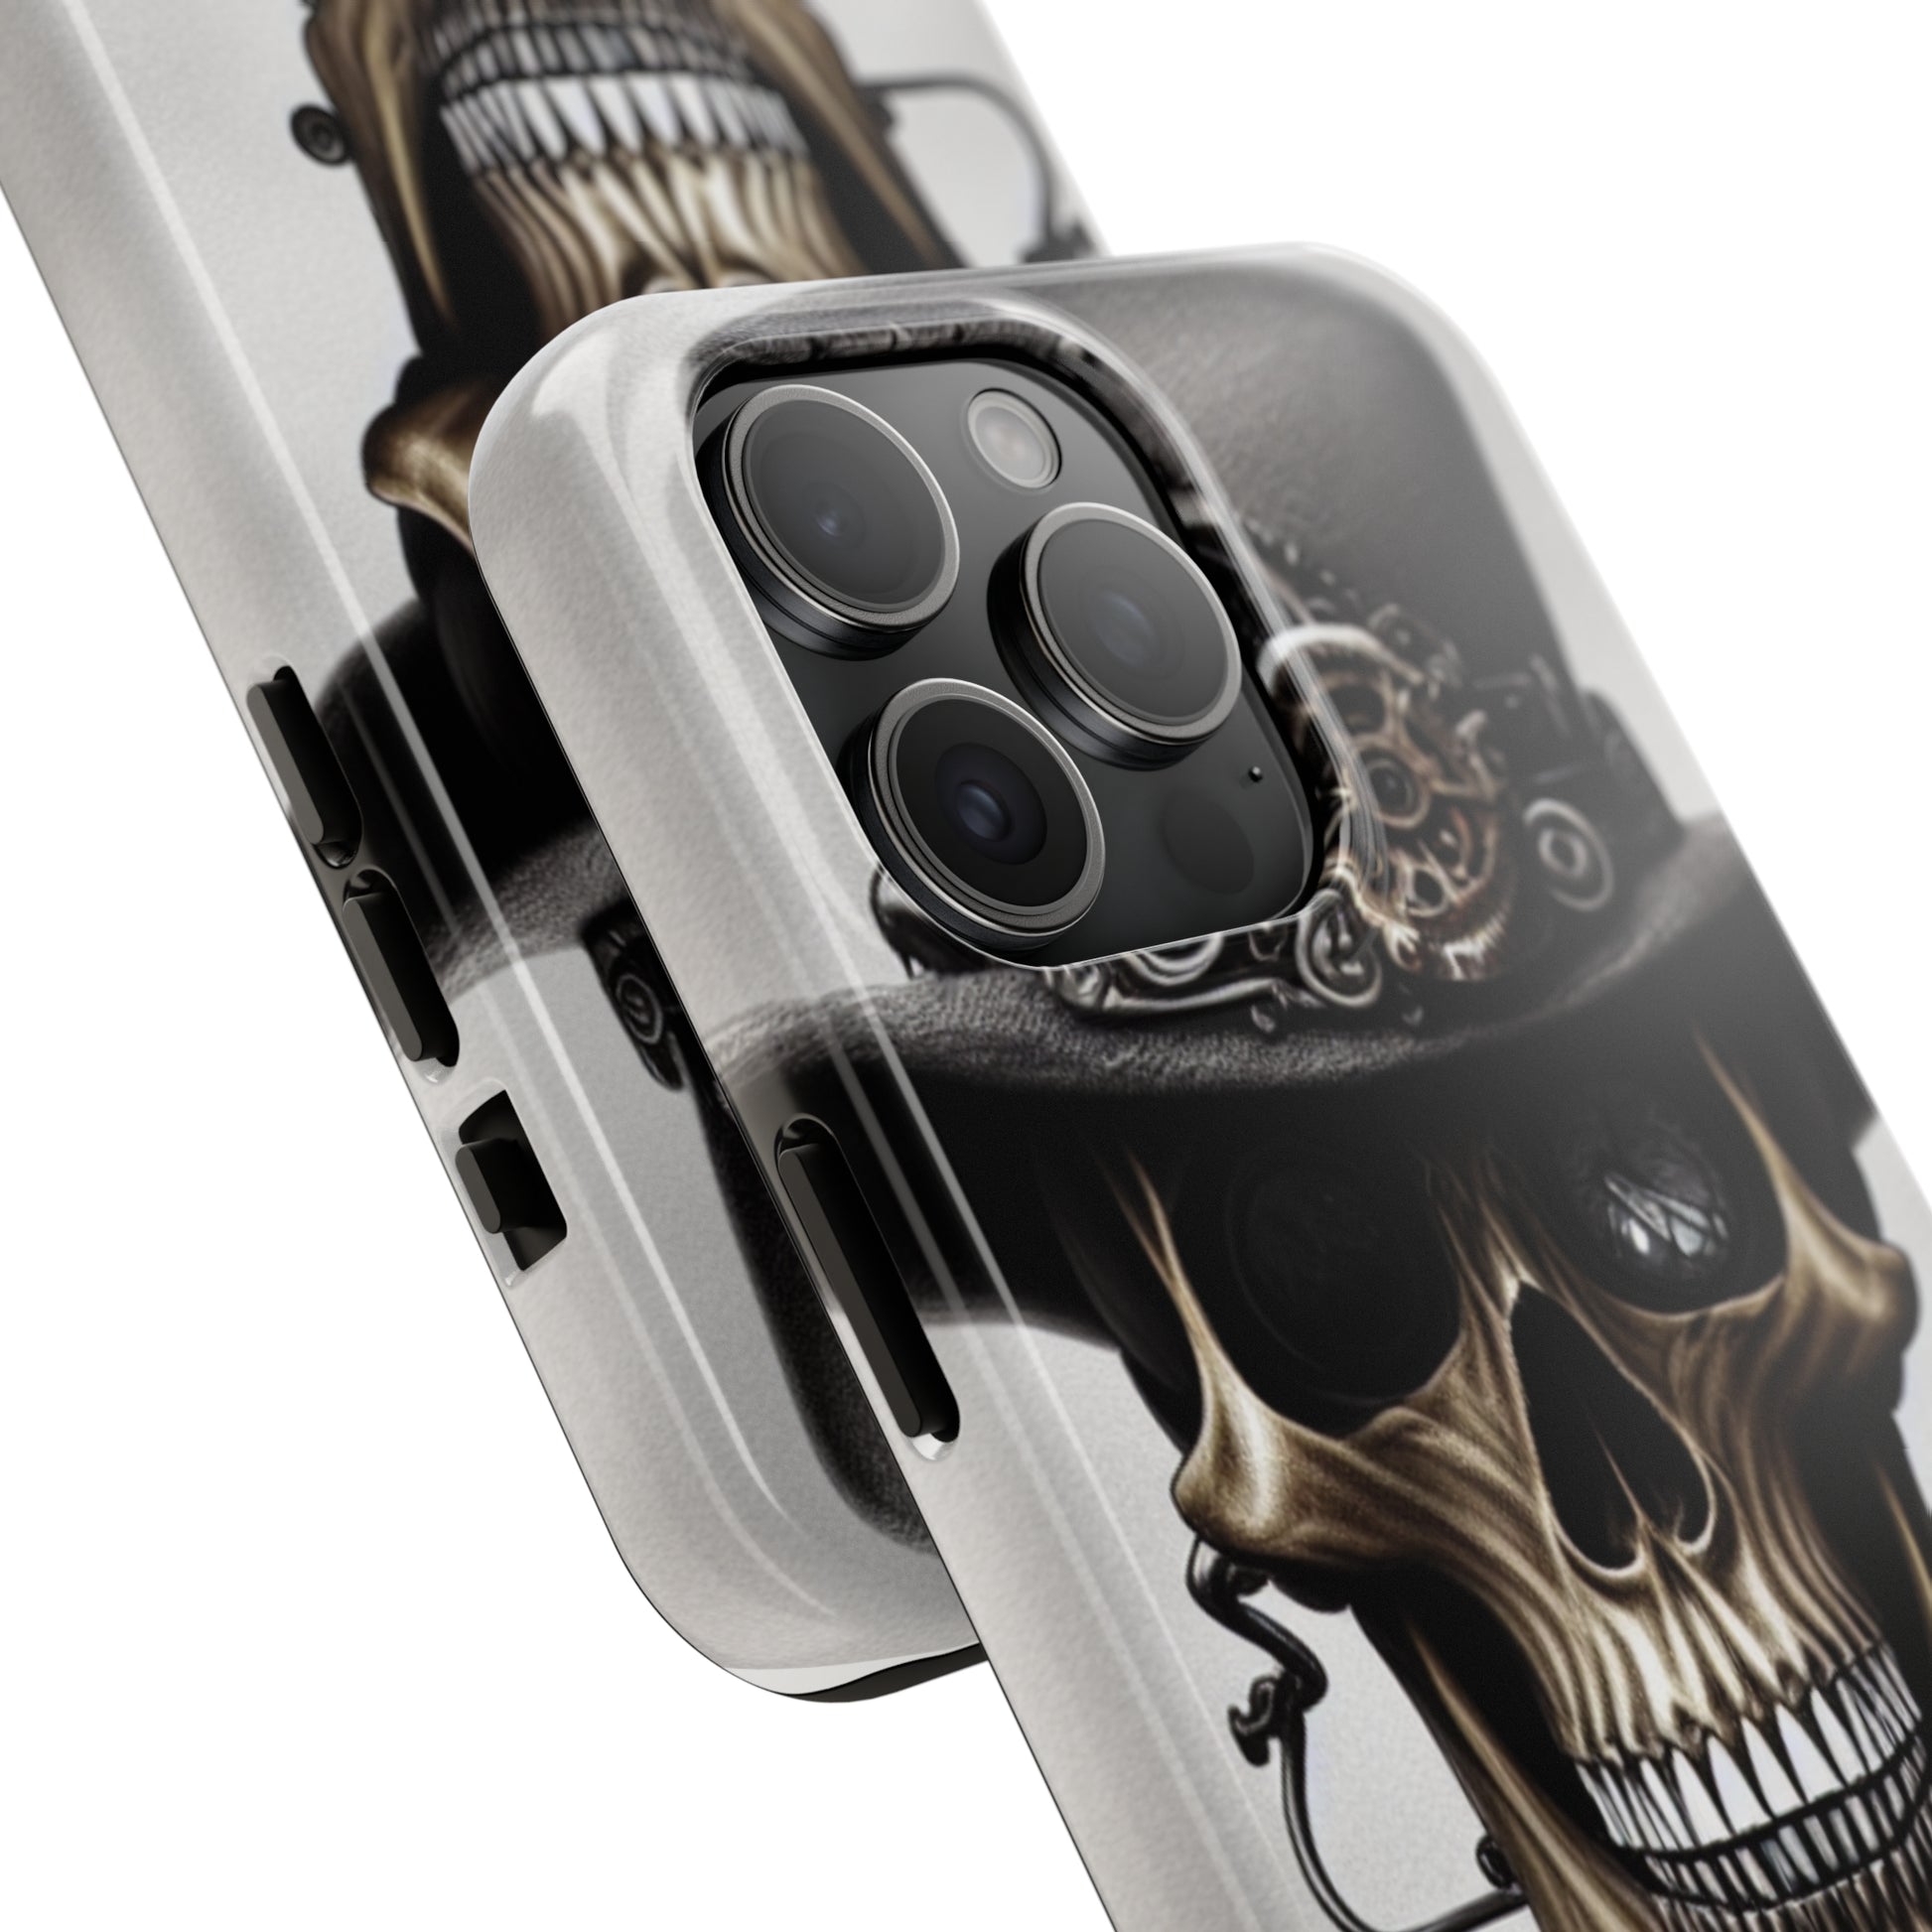 Steampunk Skull: iPhone Tough Case Design - Wireless Charging - Superior Protection - Original Designs by TheGlassyLass.com